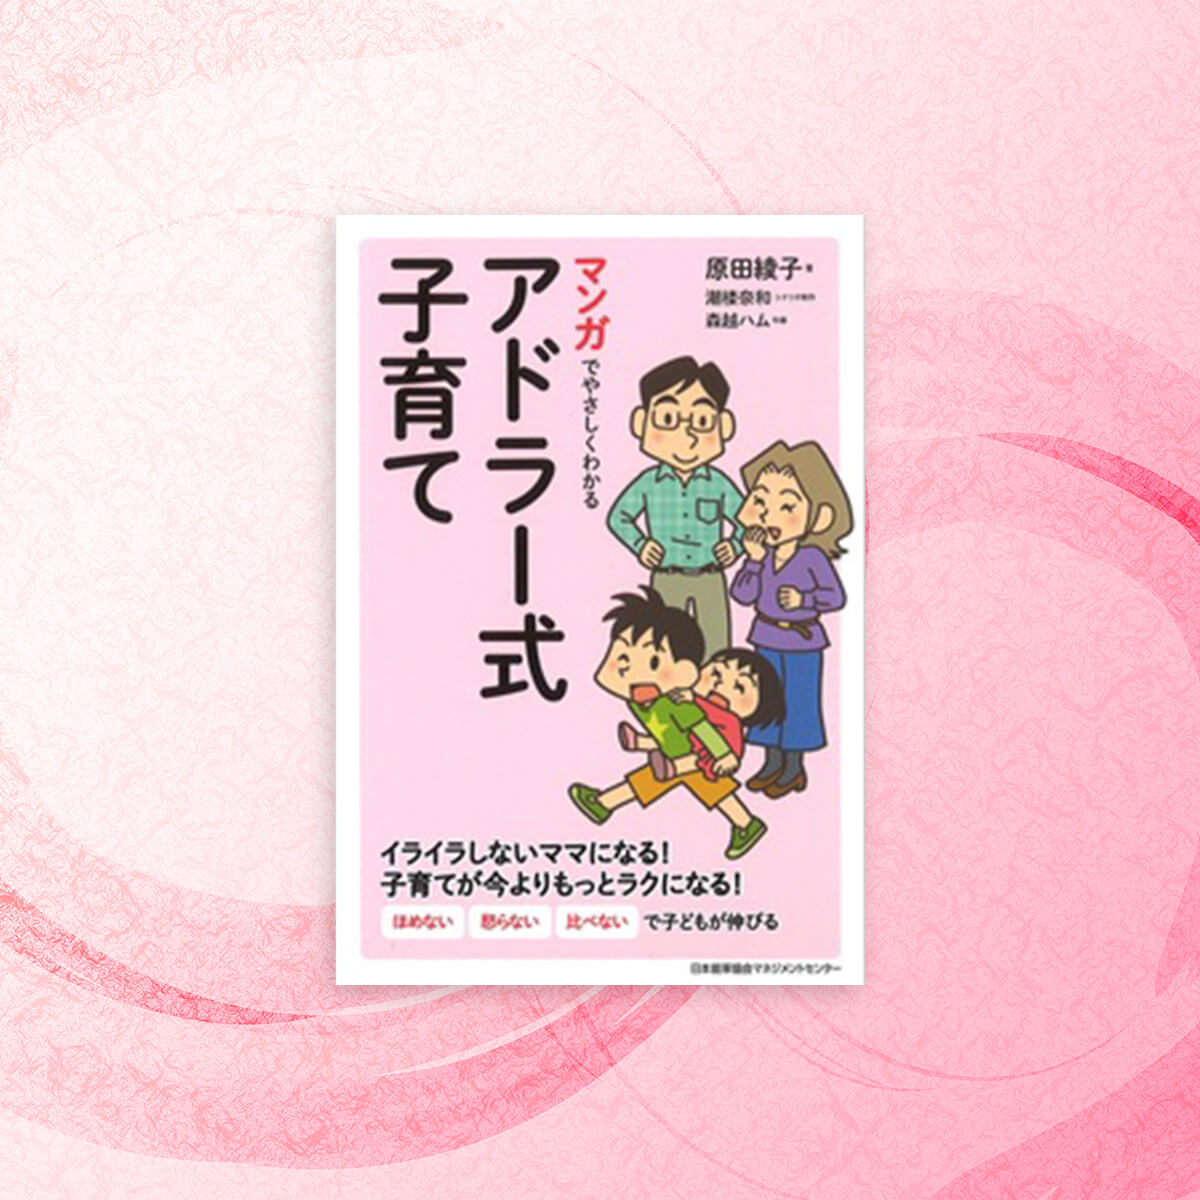 Easy Reading through Manga | Adlerian Education